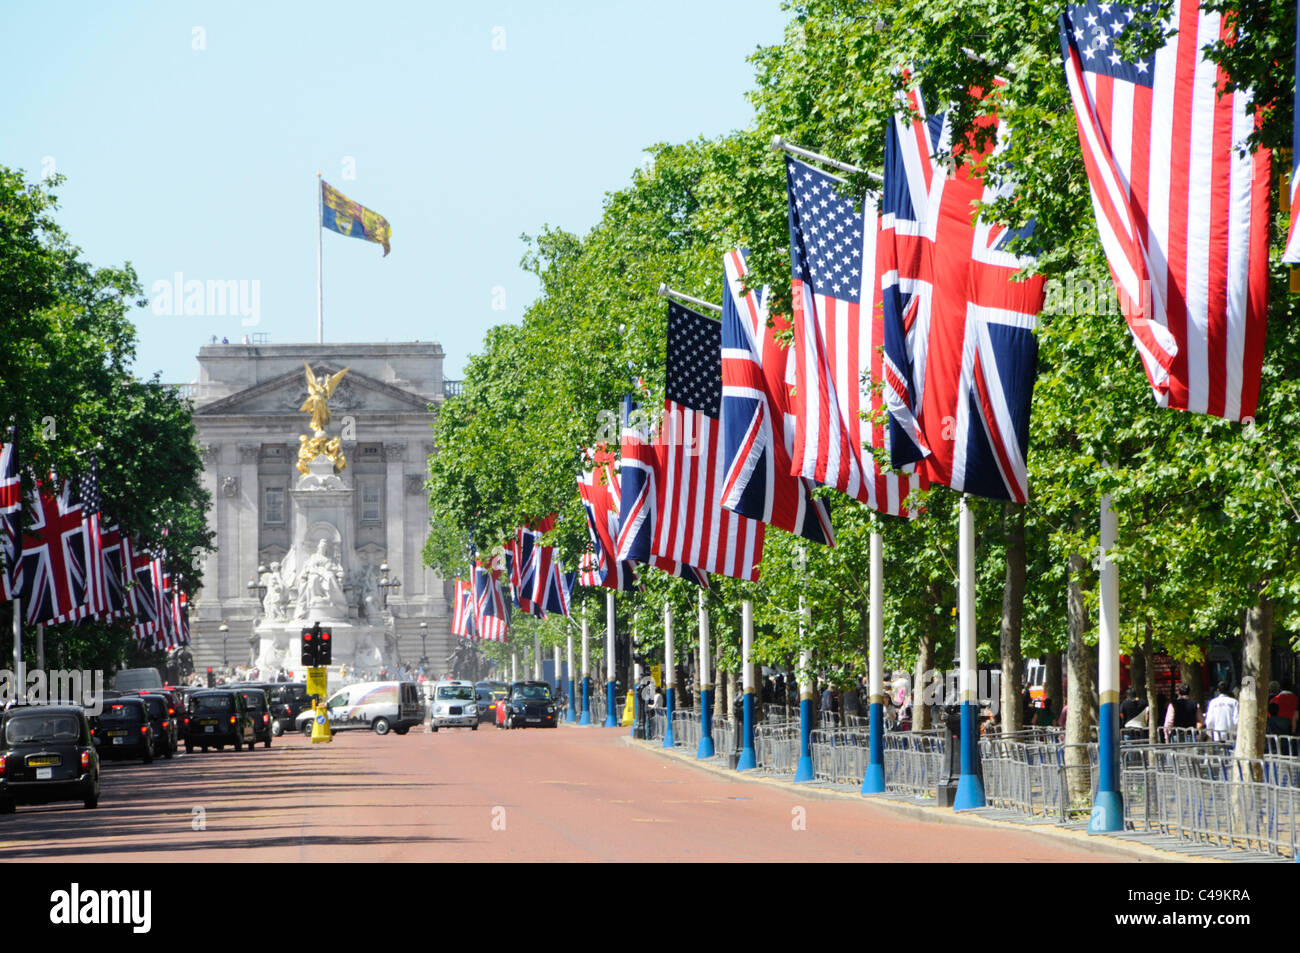 American Flag & Union Jack Länge der Linie der Mall & Royal Standard Buckingham Palace Obama State Presidential Besuch der Straßenszene London England UK Stockfoto